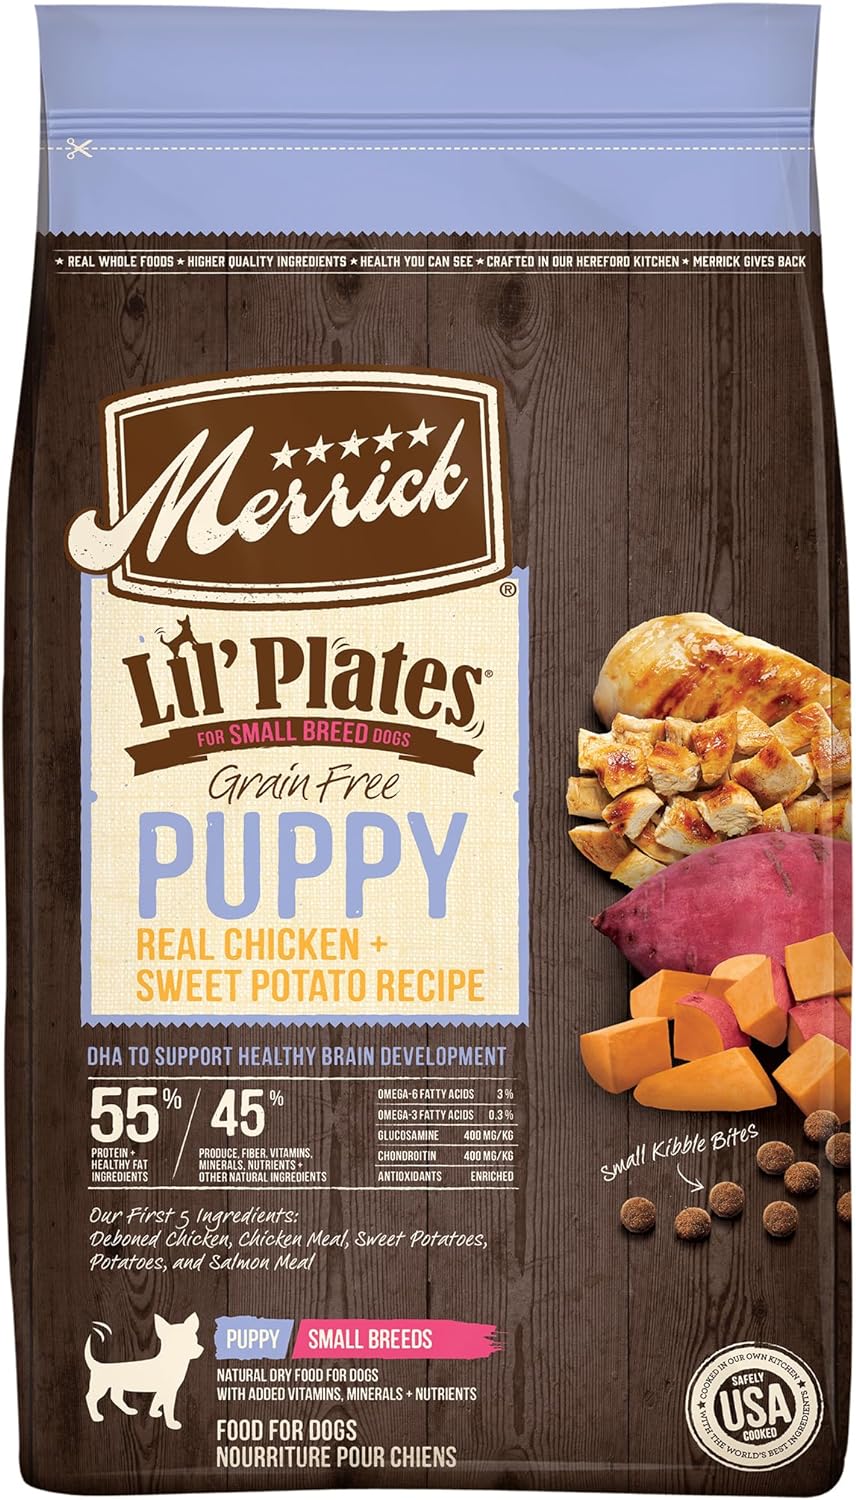 Merrick Lil’ Plates Grain-Free Puppy Real Chicken + Sweet Potato Recipe Dry Dog Food – Gallery Image 1